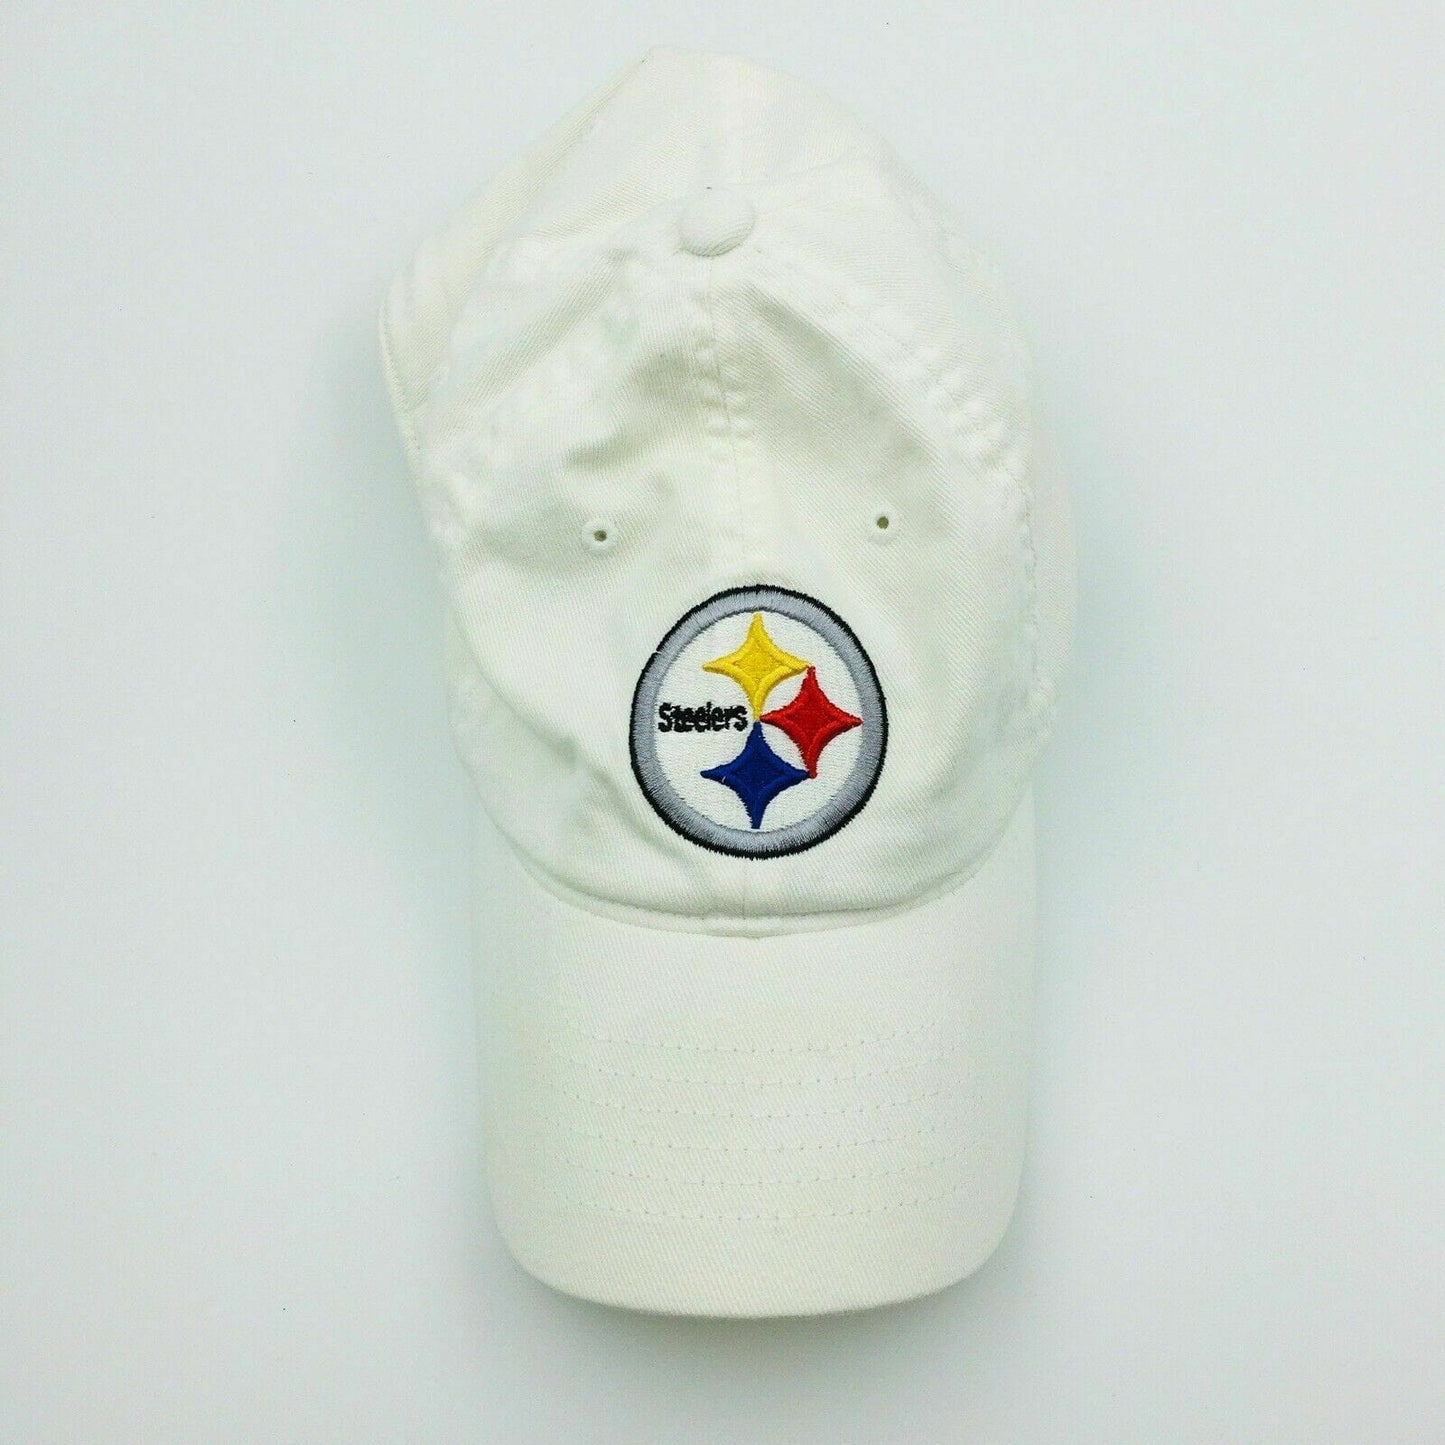 Reebok On Field Pittsburgh Steelers Baseball Hat Cap White OSFA Headwear NFL